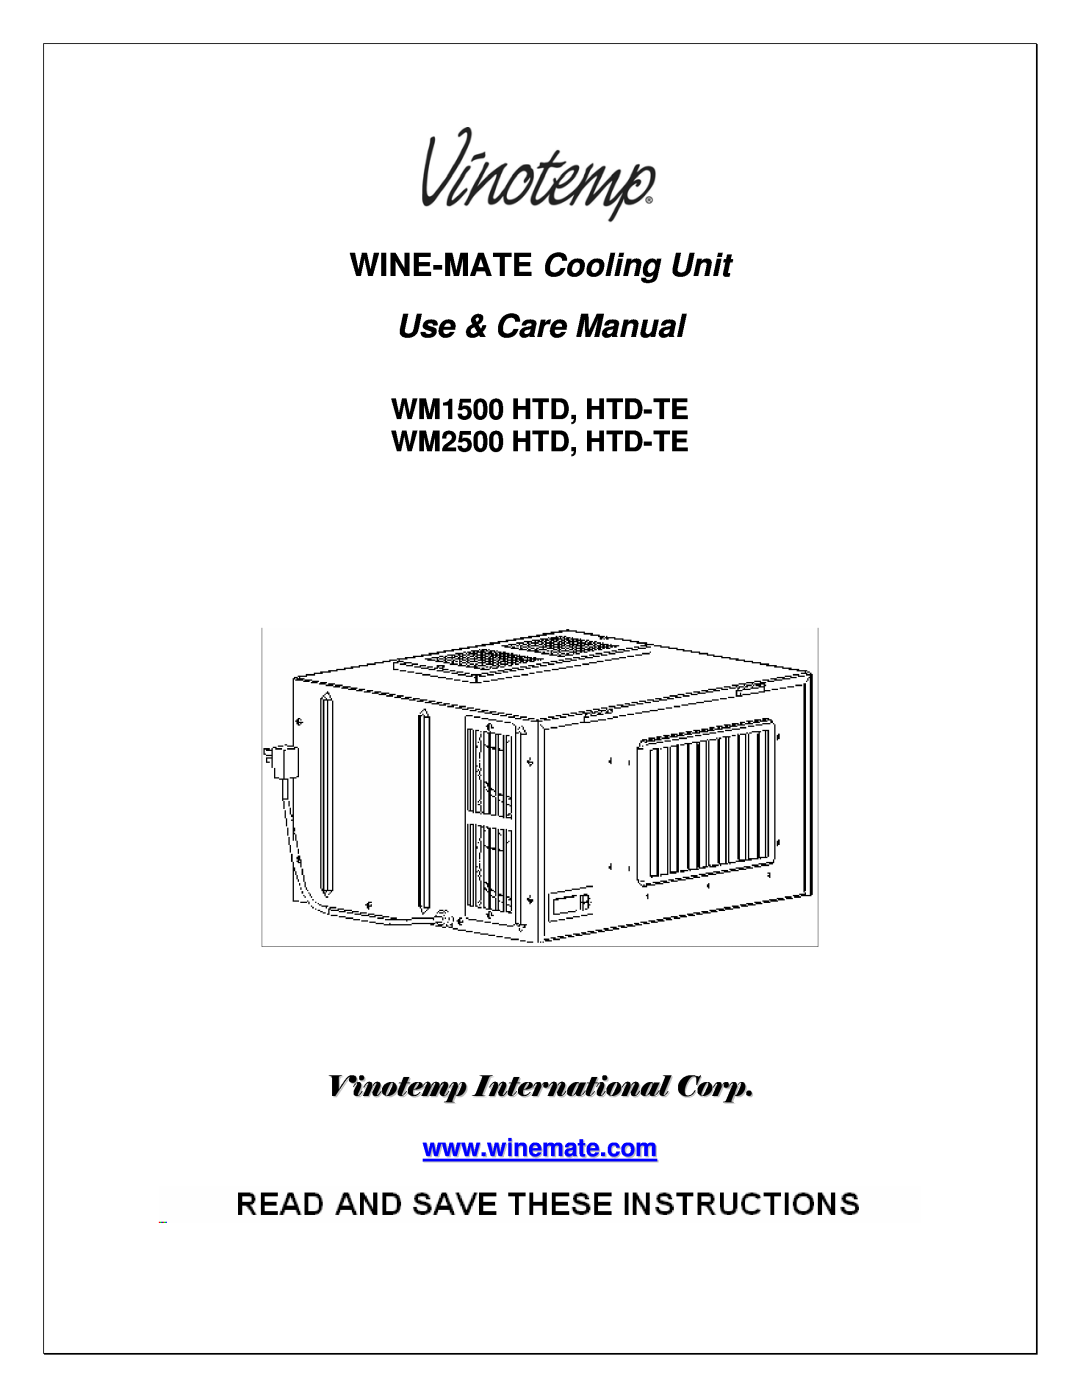 Vinotemp WM1500 HTD-TE manual WM1500 HTD, HTD-TE WM2500 HTD, HTD-TE, WINE-MATE Cooling Unit Use & Care Manual 